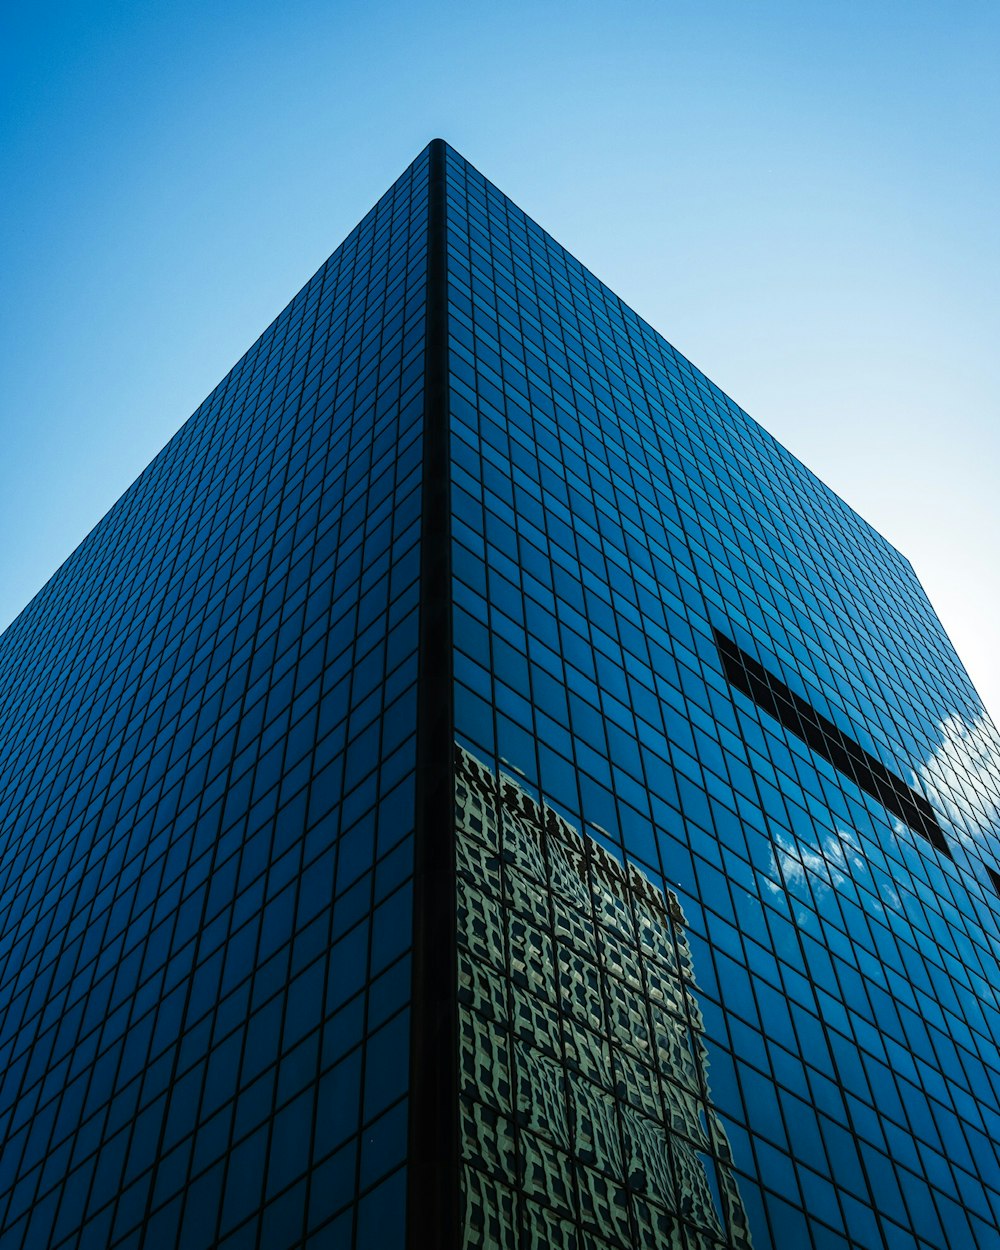 curtain-wall high-rise building under blue sky